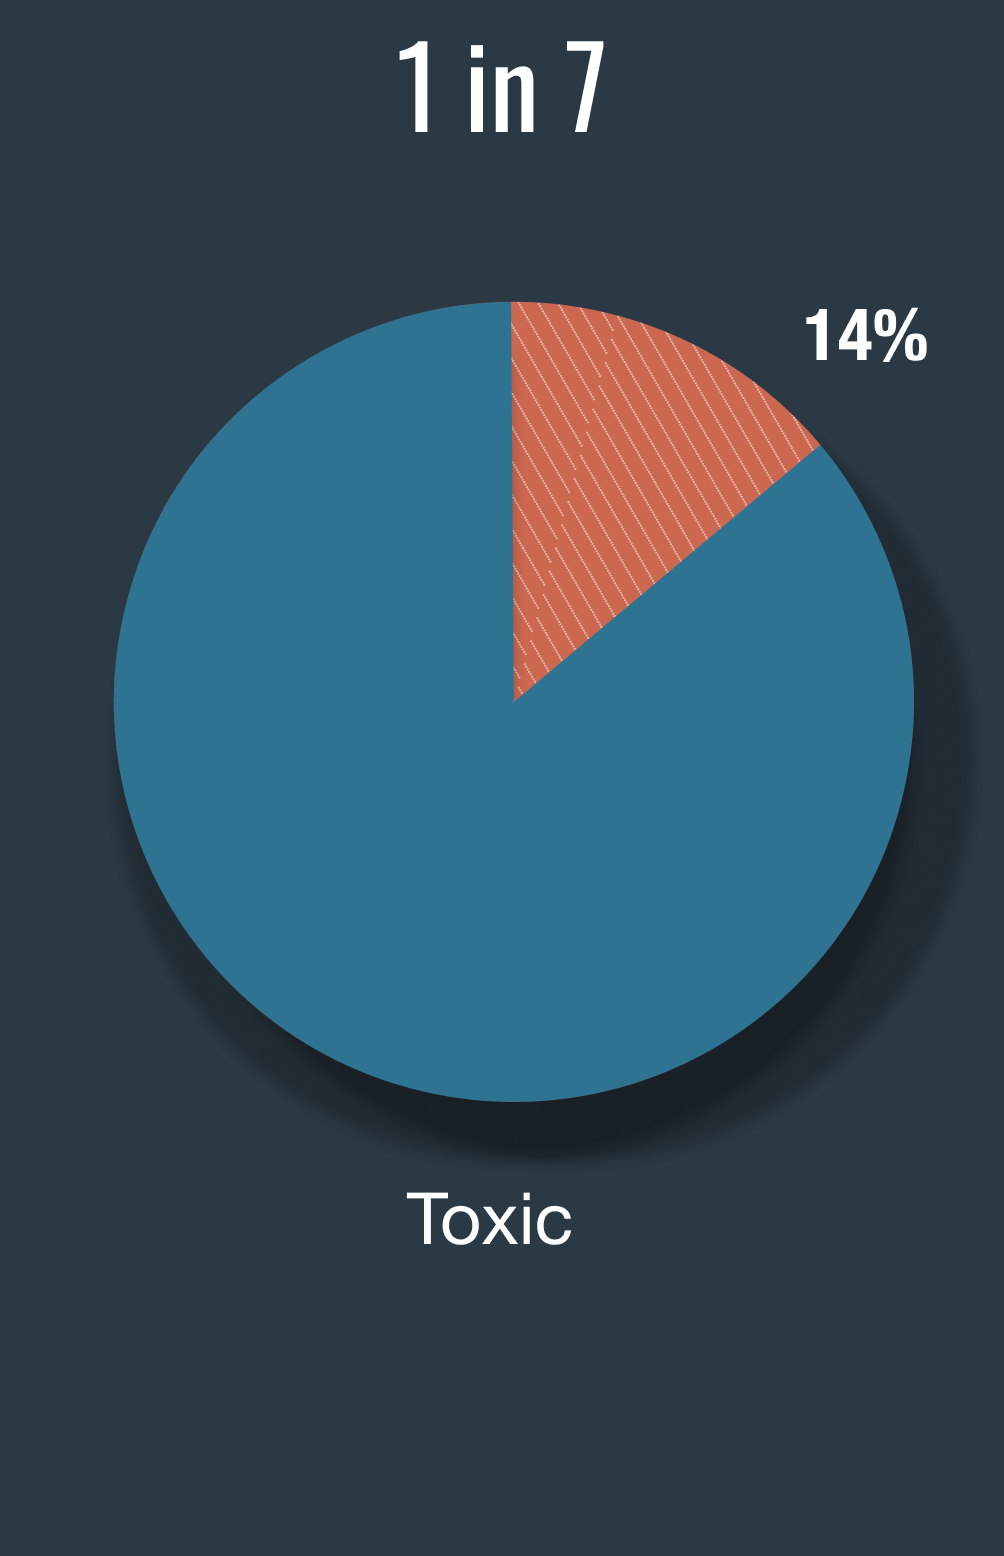 1 in 7 said: Toxic